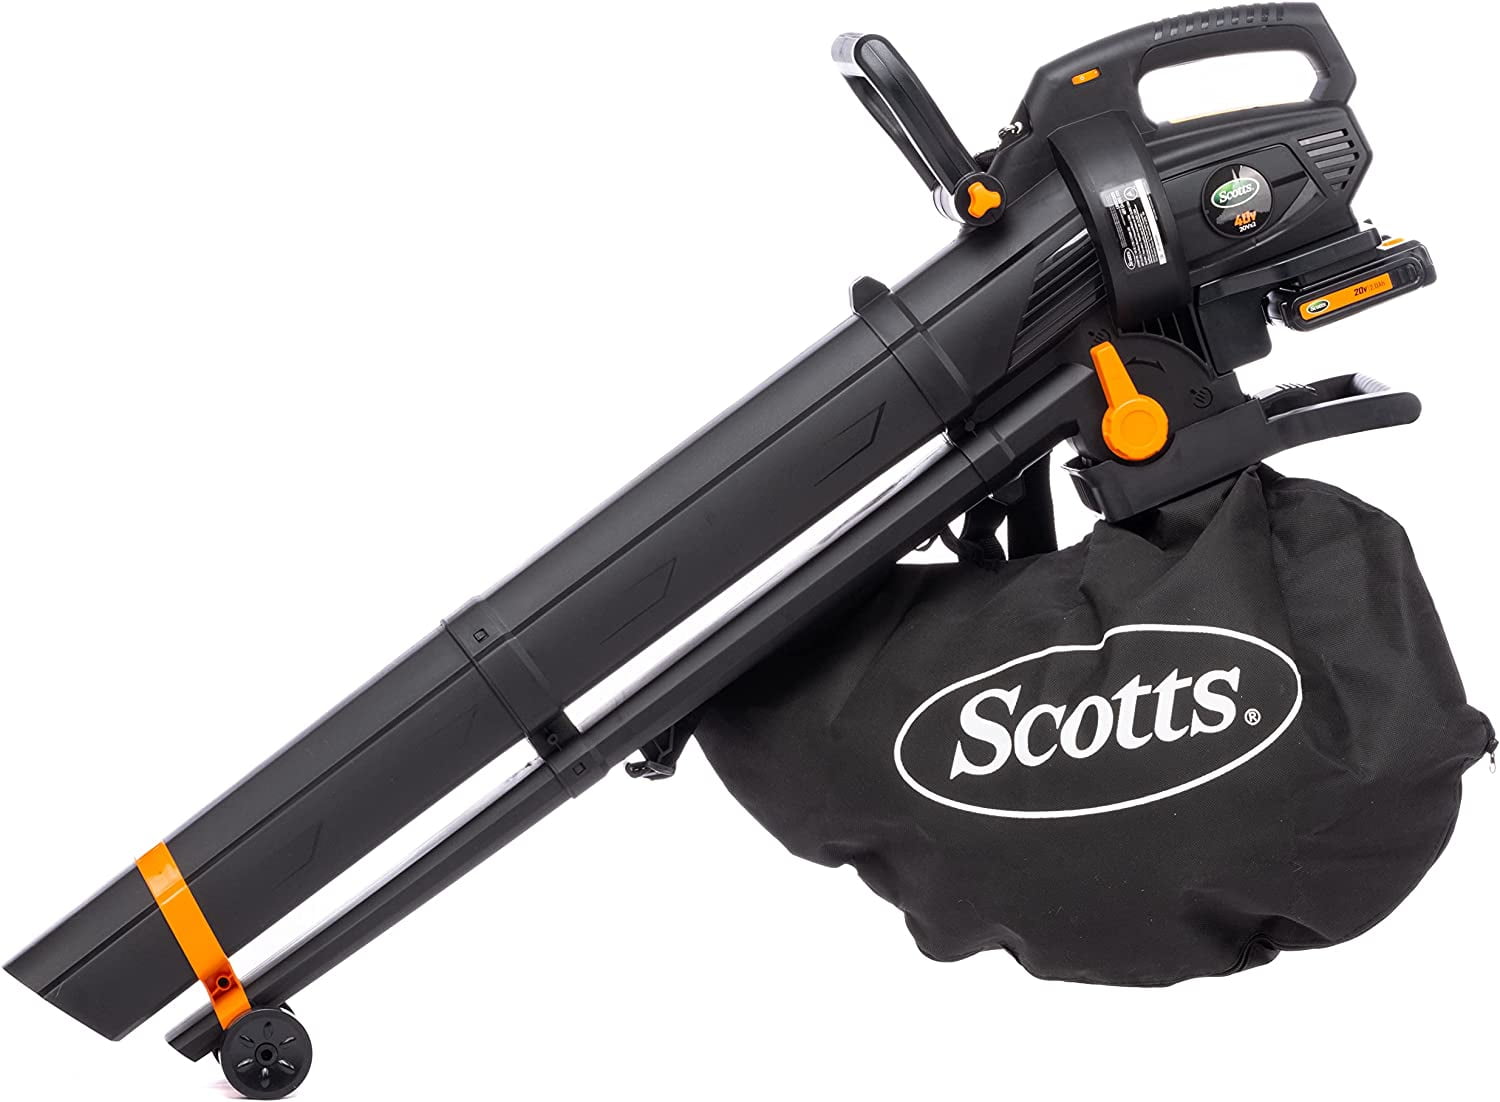 Scotts Outdoor Power Tools 2x20-Volt 3-in-1 Cordless Leaf Blower, Leaf Vaccum, Leaf Mulcher - 40V